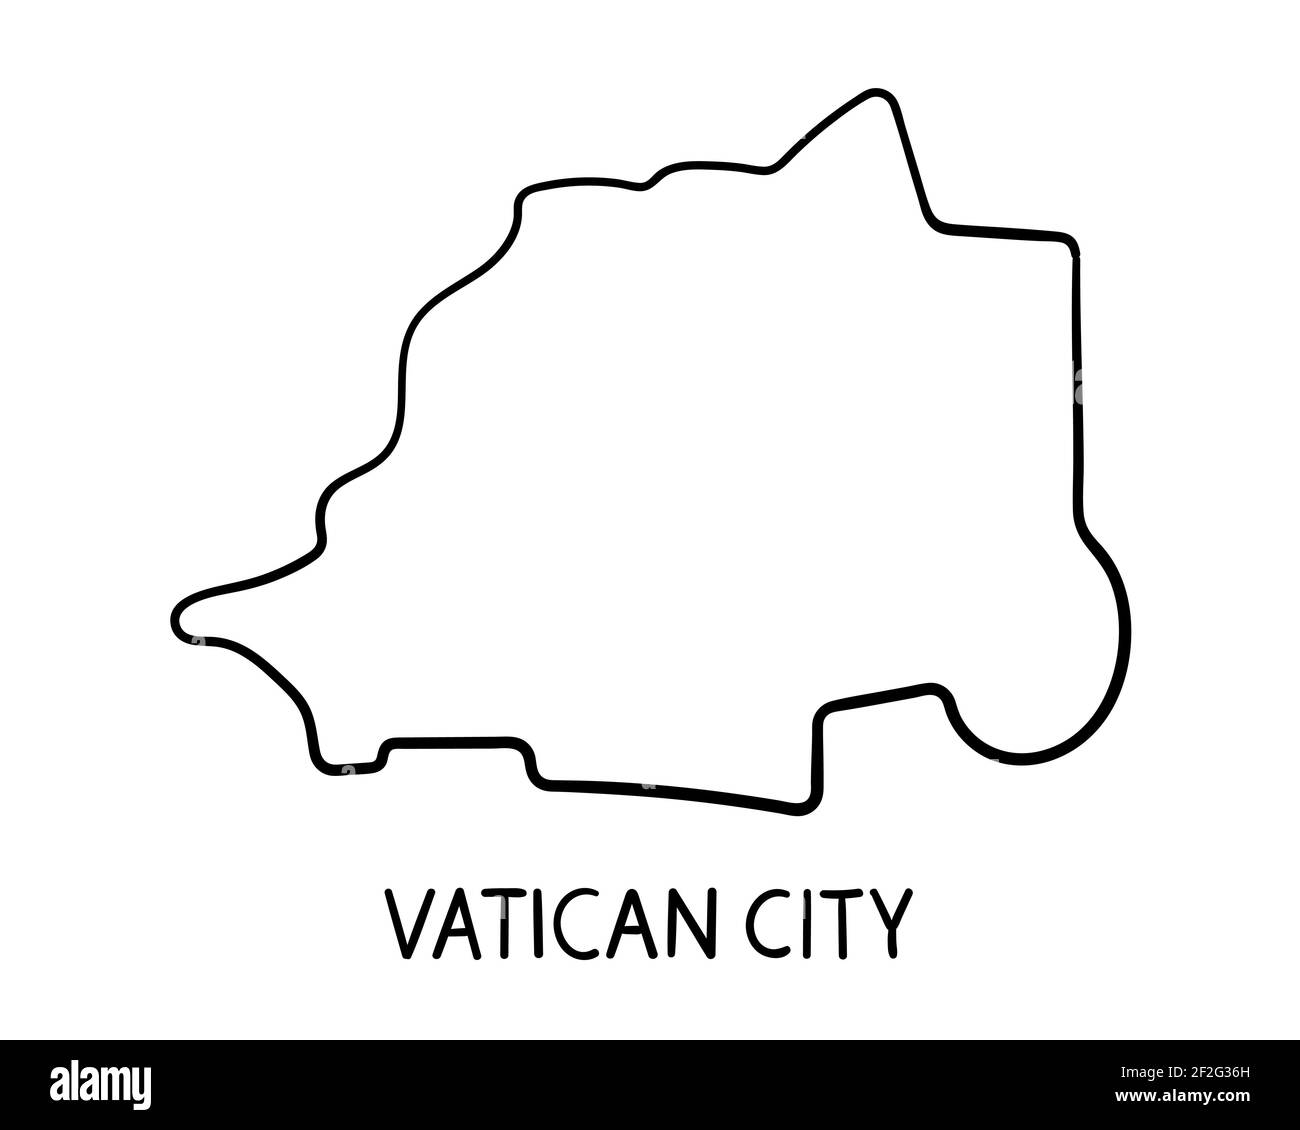 Vatican City Map - Hand Drawn Illustration Stock Photo